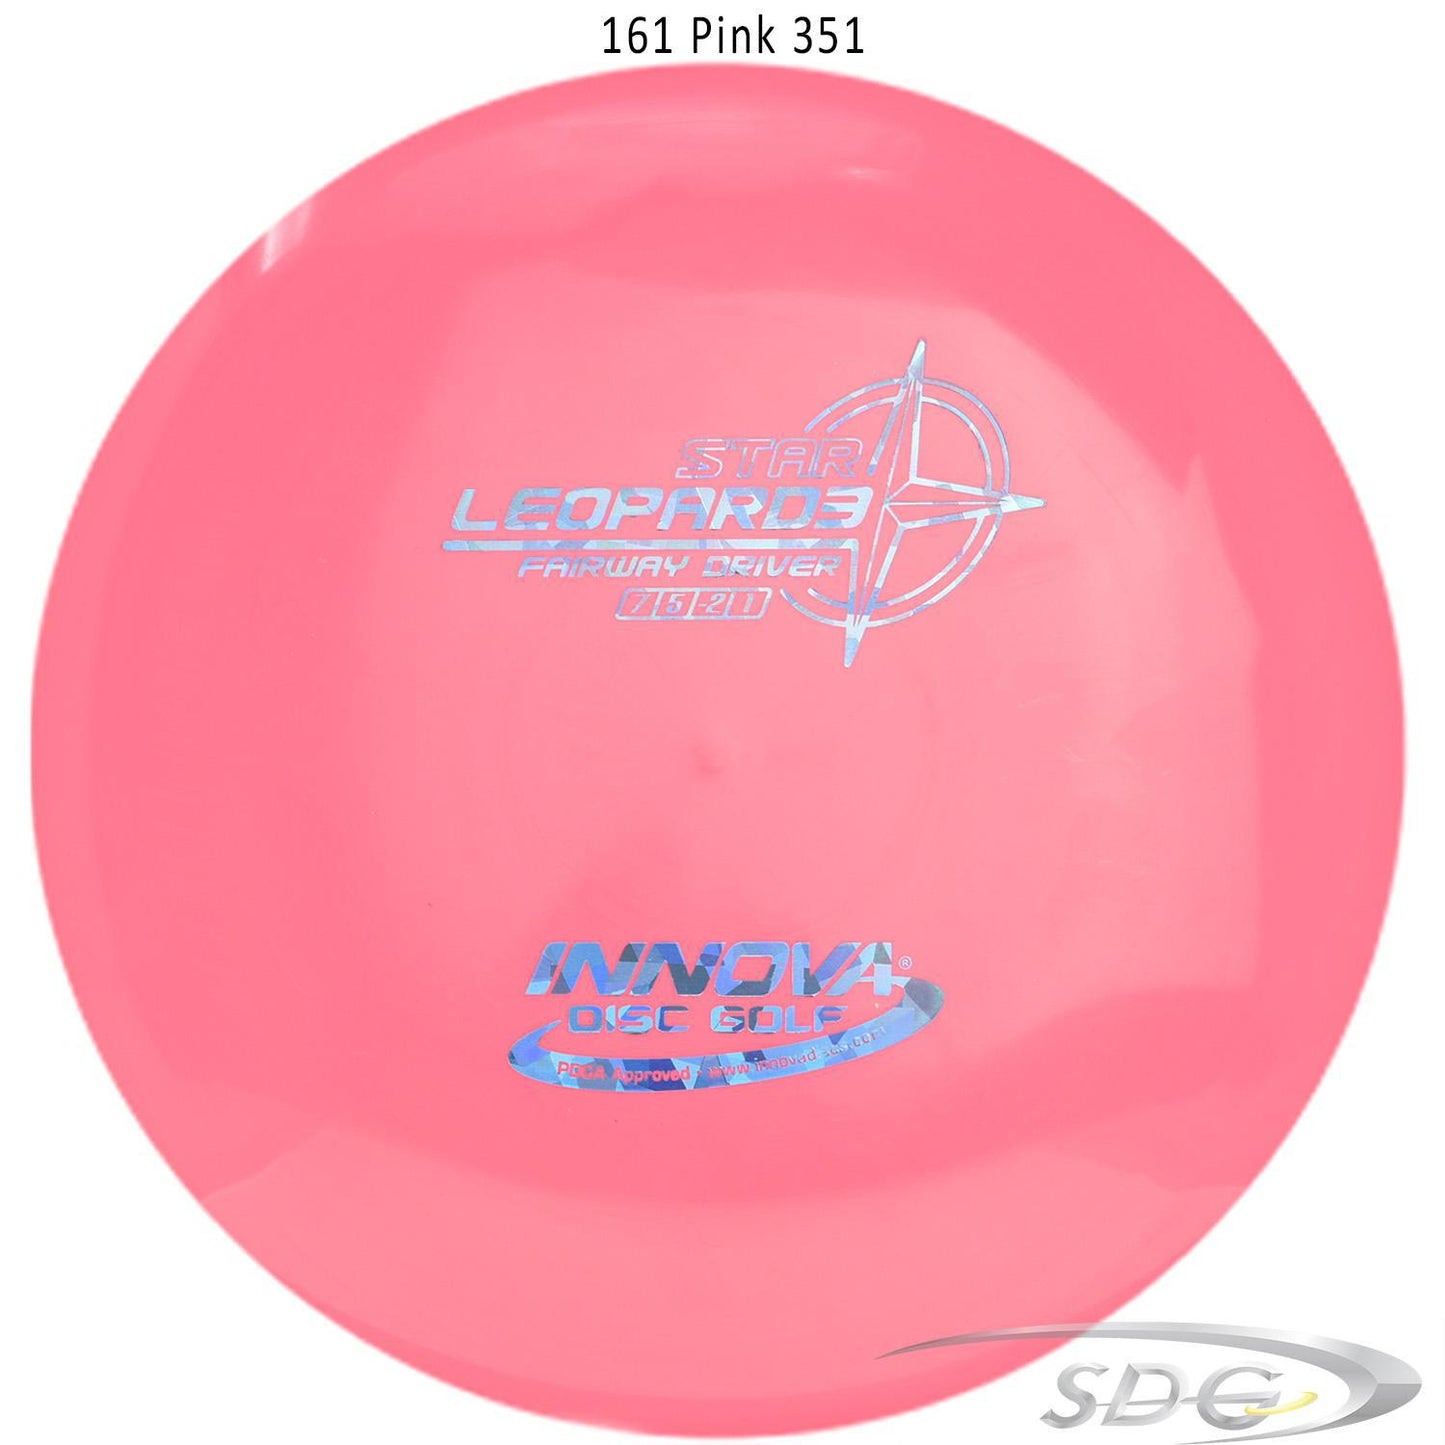 innova-star-leopard3-disc-golf-fairway-driver 161 Pink 351 